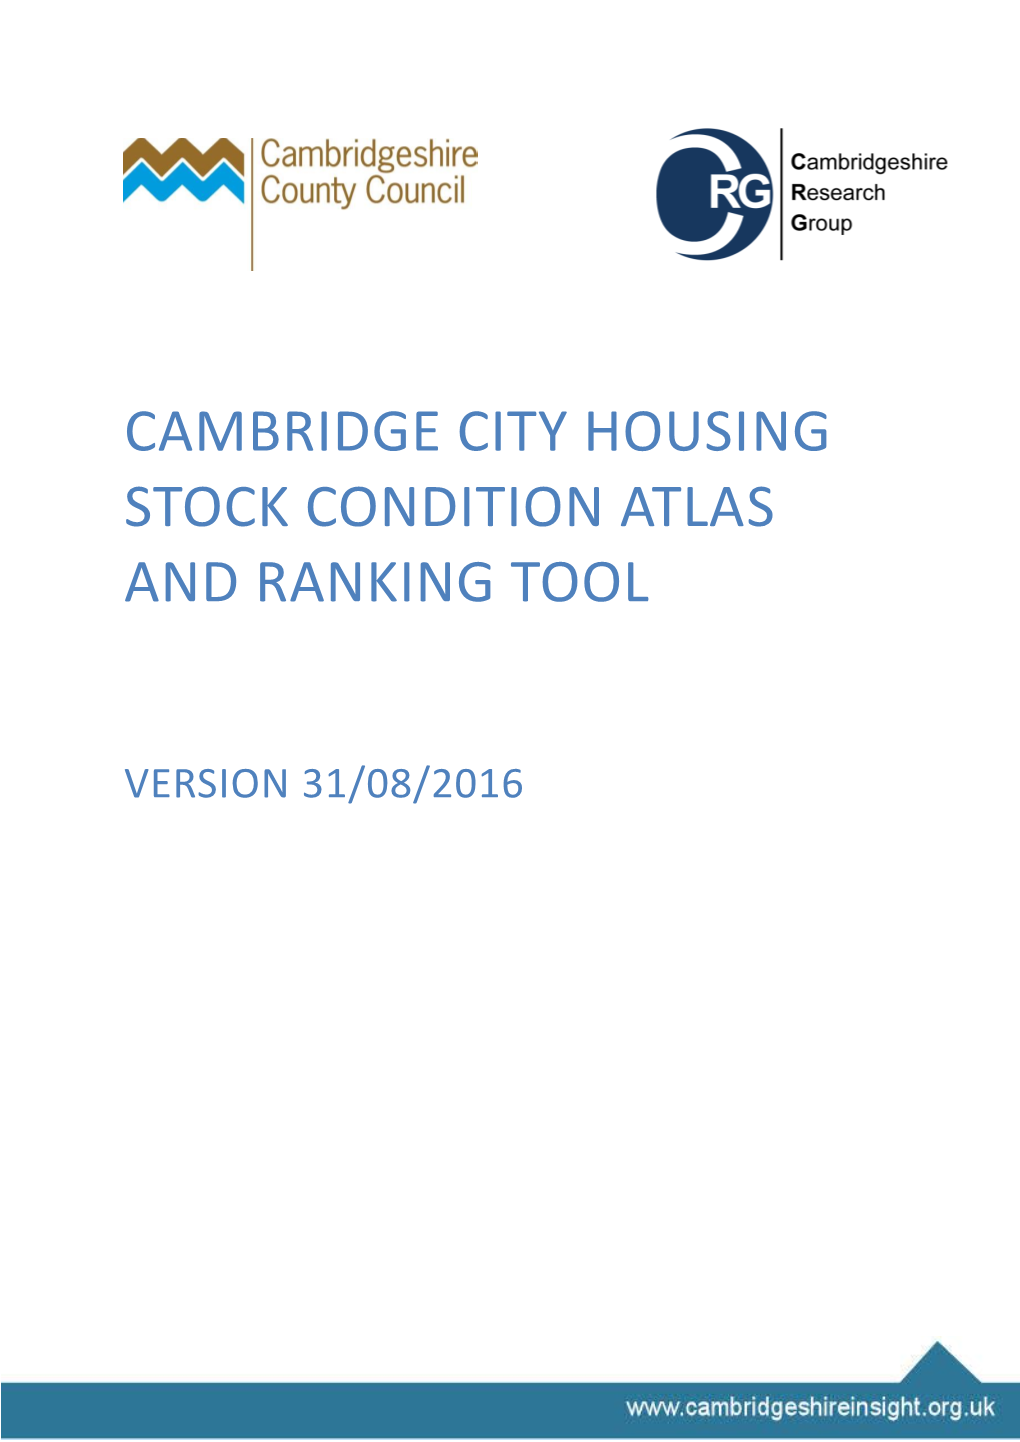 Cambridge City Housing Stock Condition Atlas and Ranking Tool